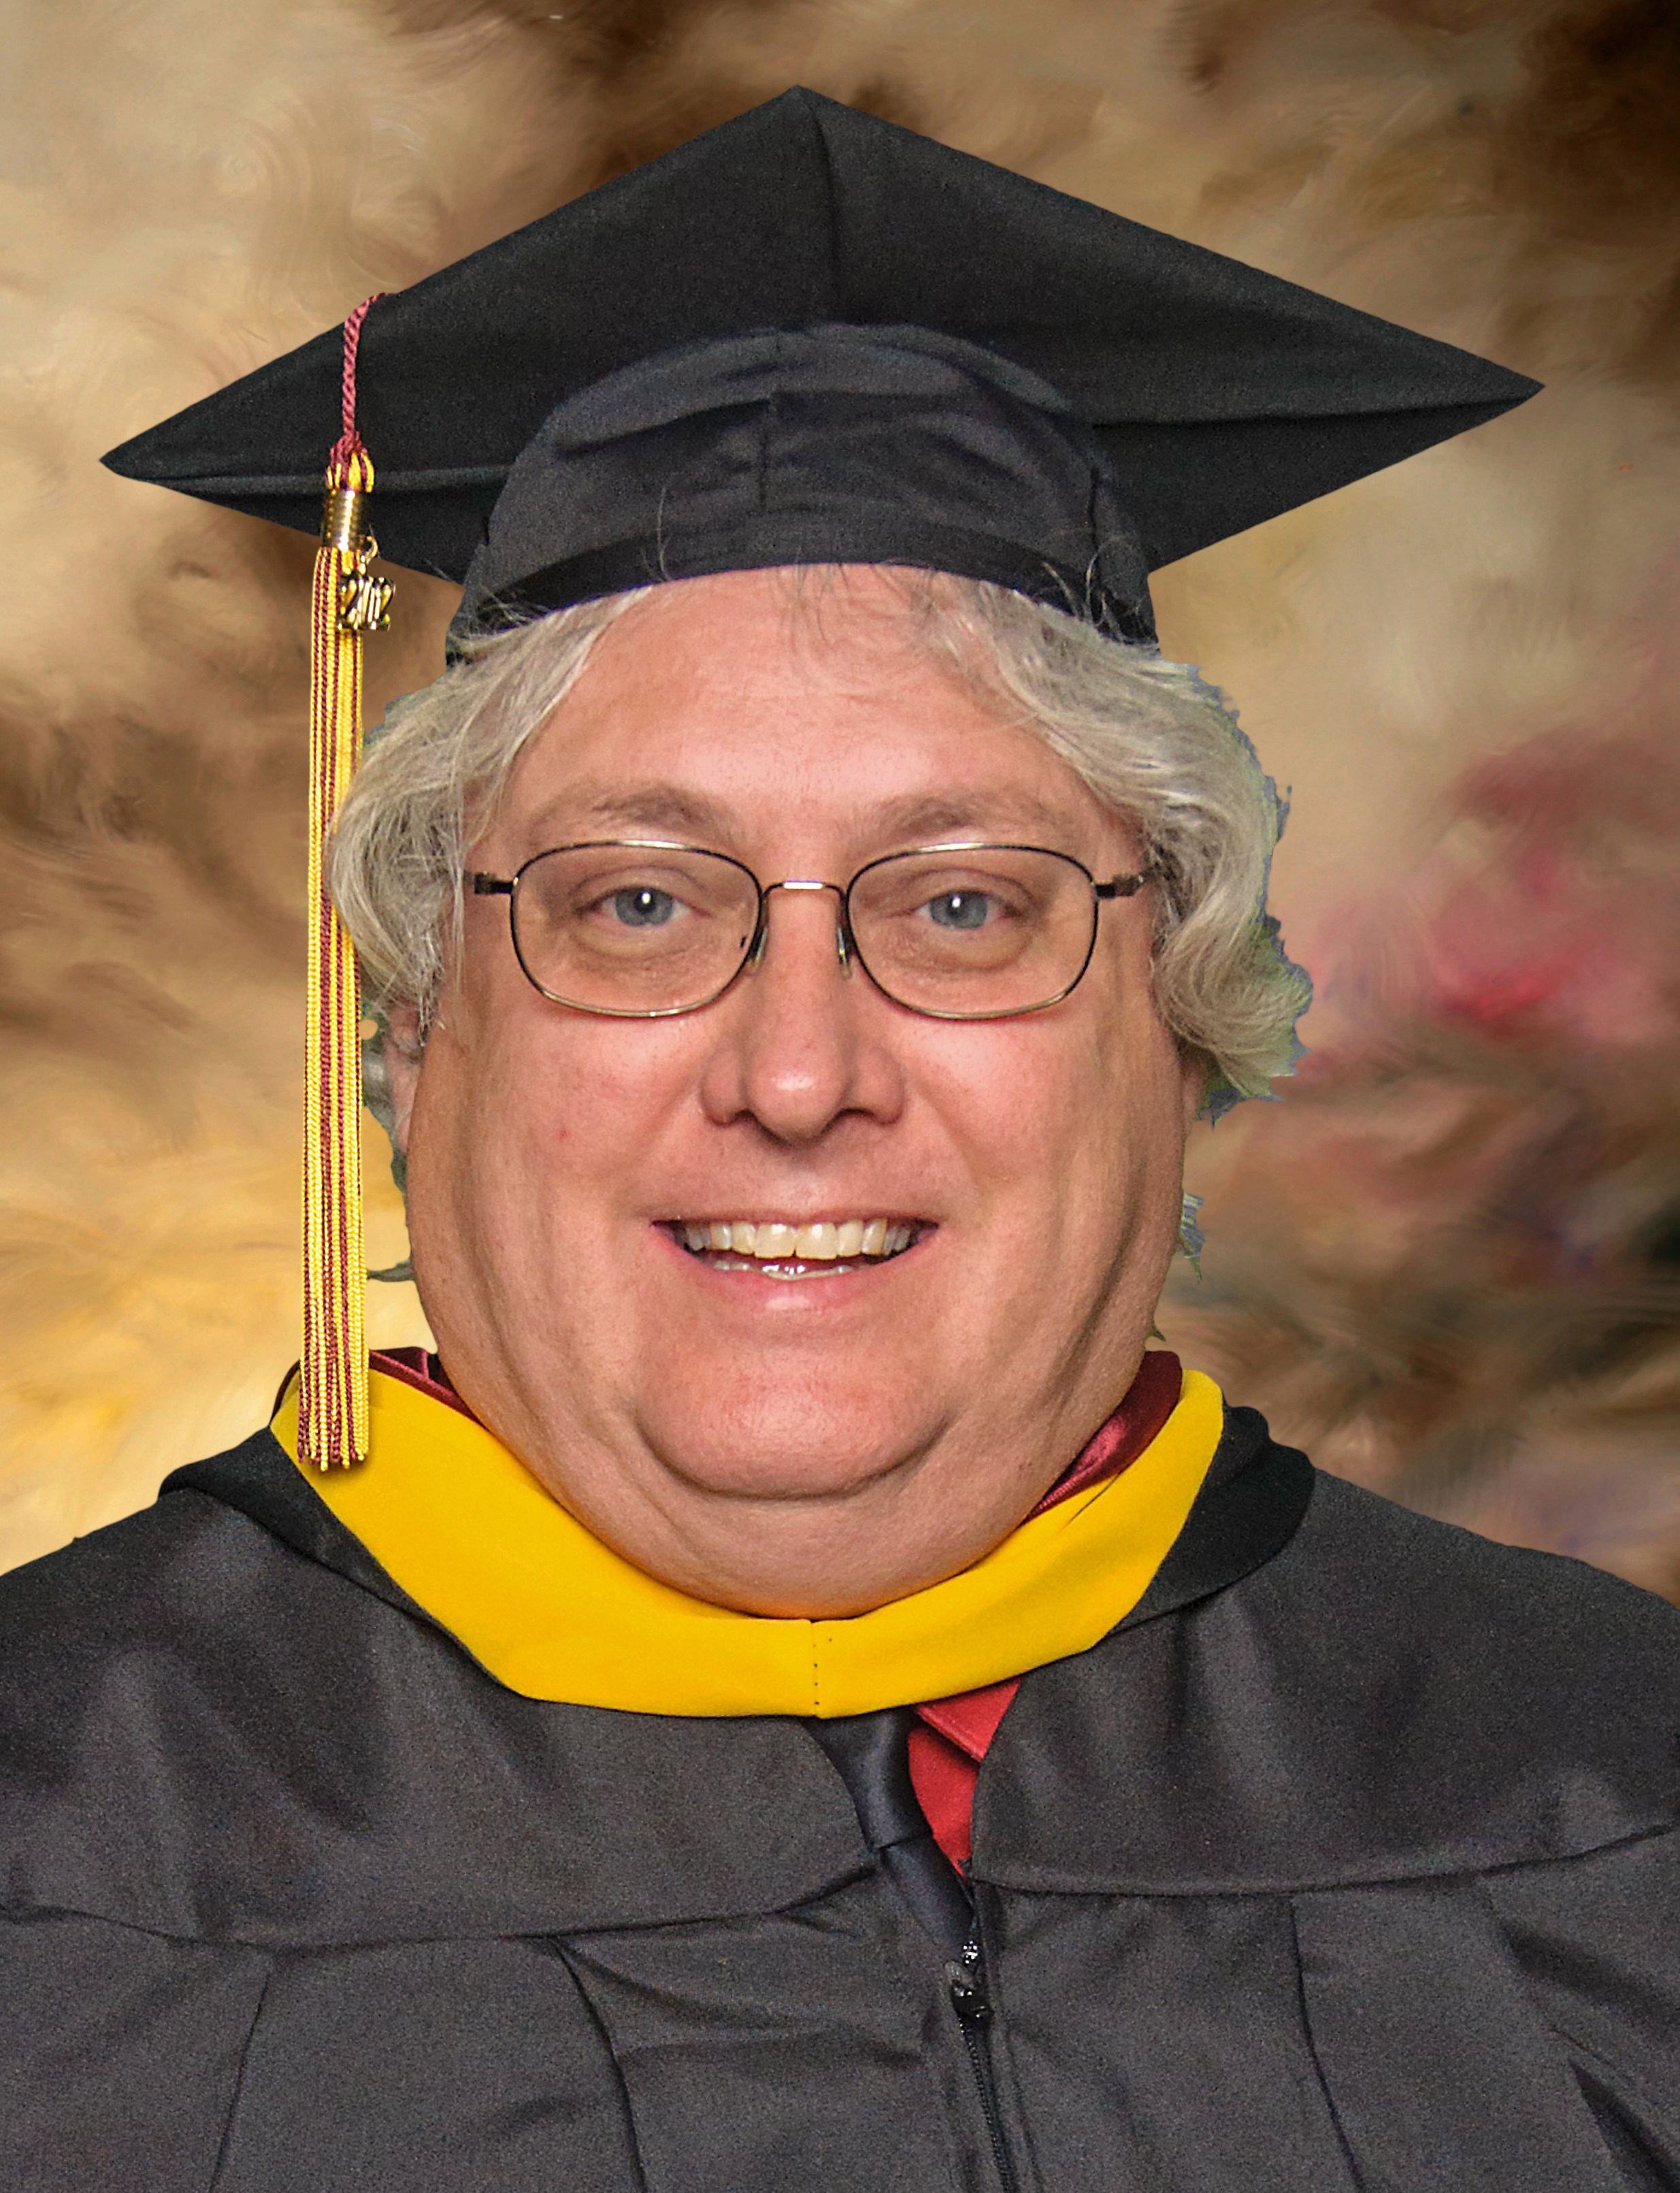 Mark Summers' 2012 graduation photo